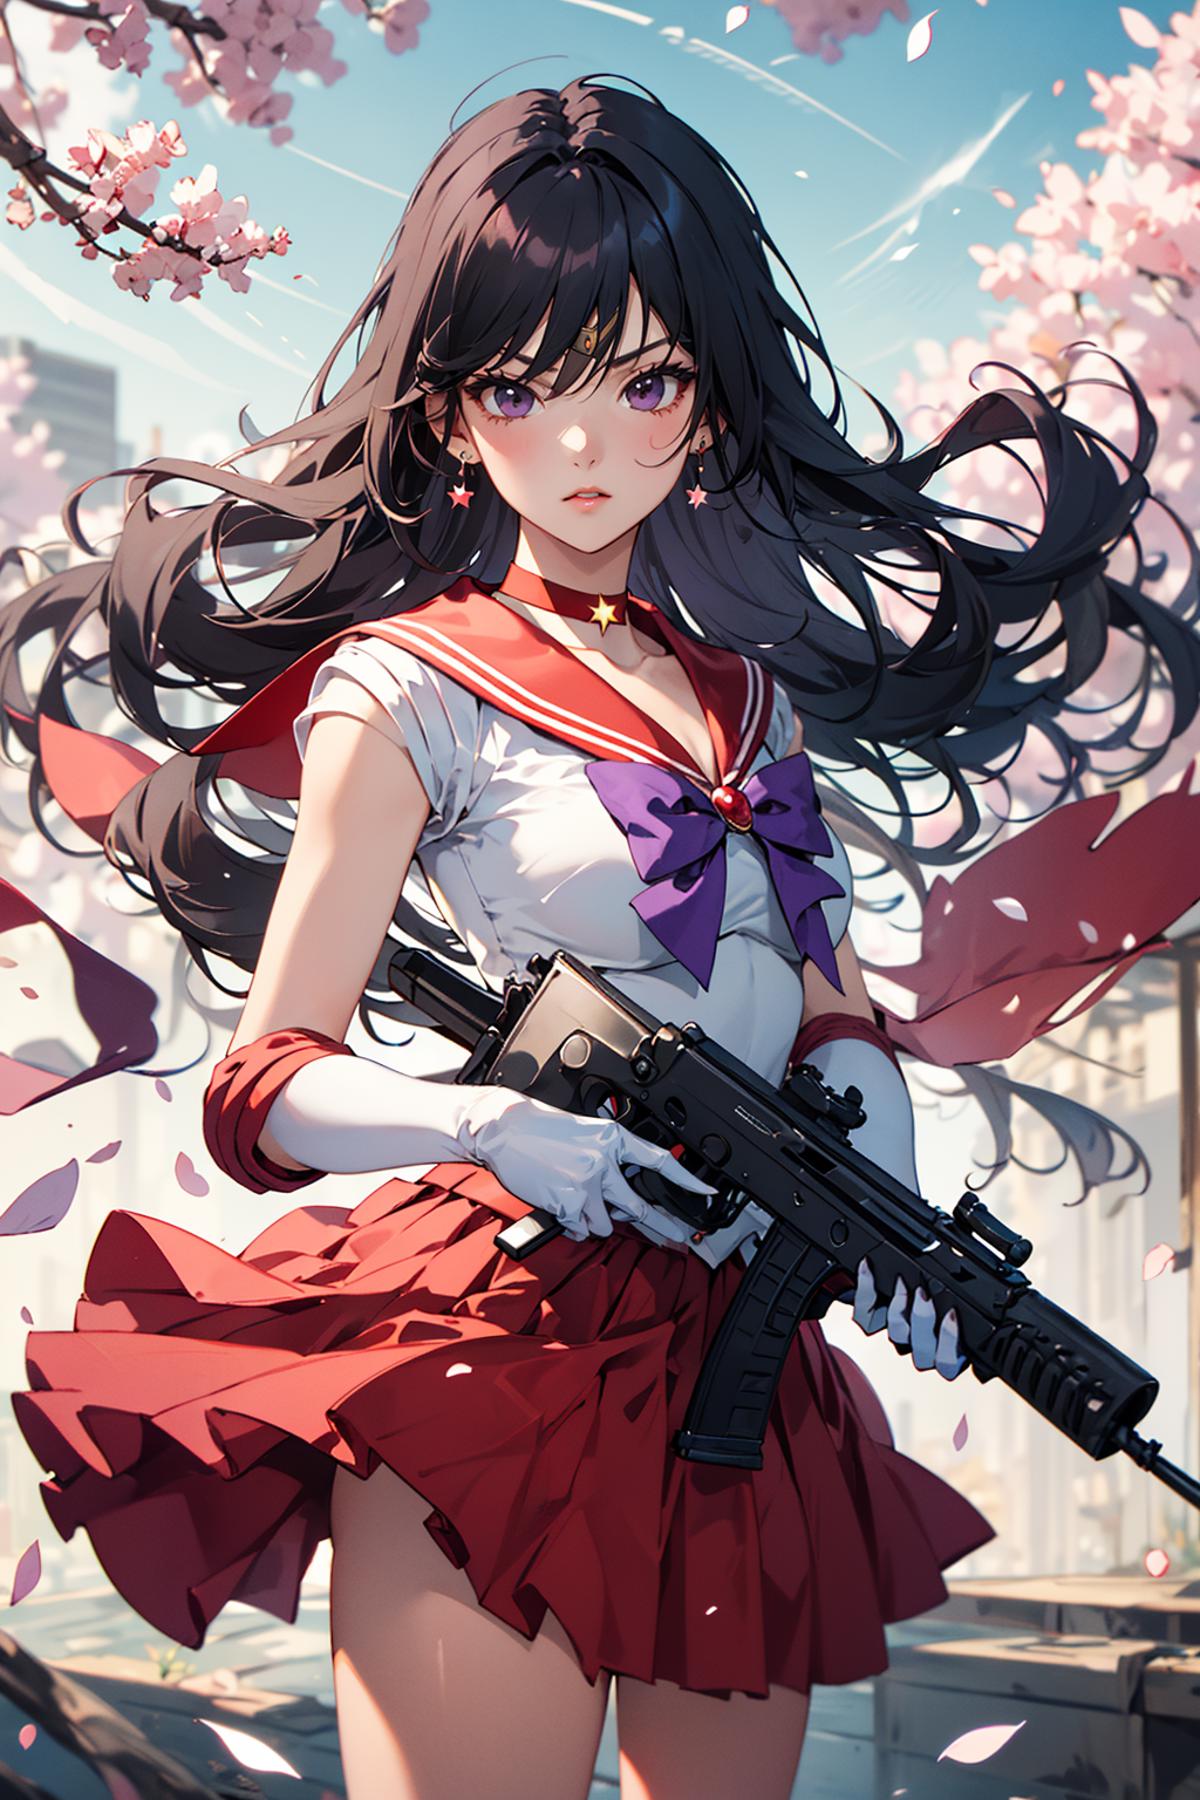 [OpenPose + Lineart] Holding gun image by Tokugawa